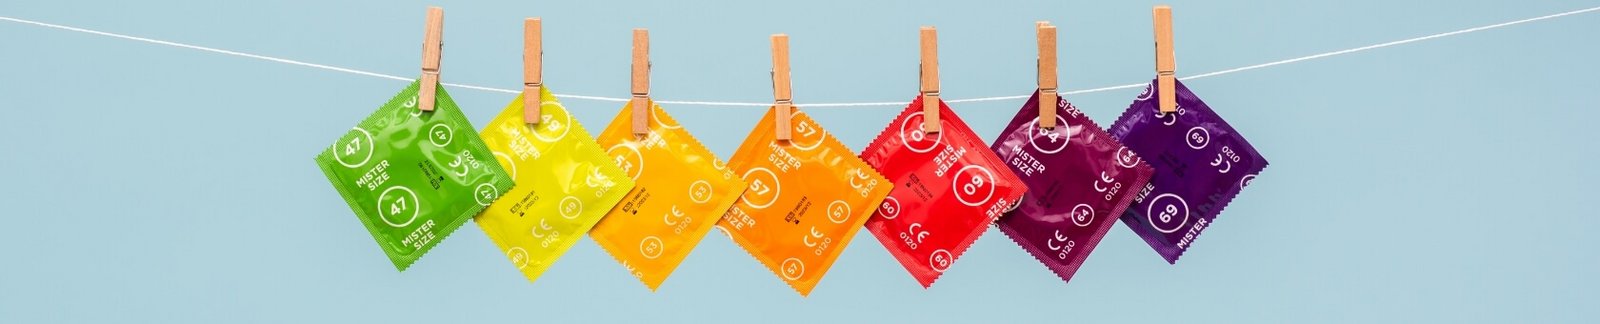 7 preservativos Mister Size no varal